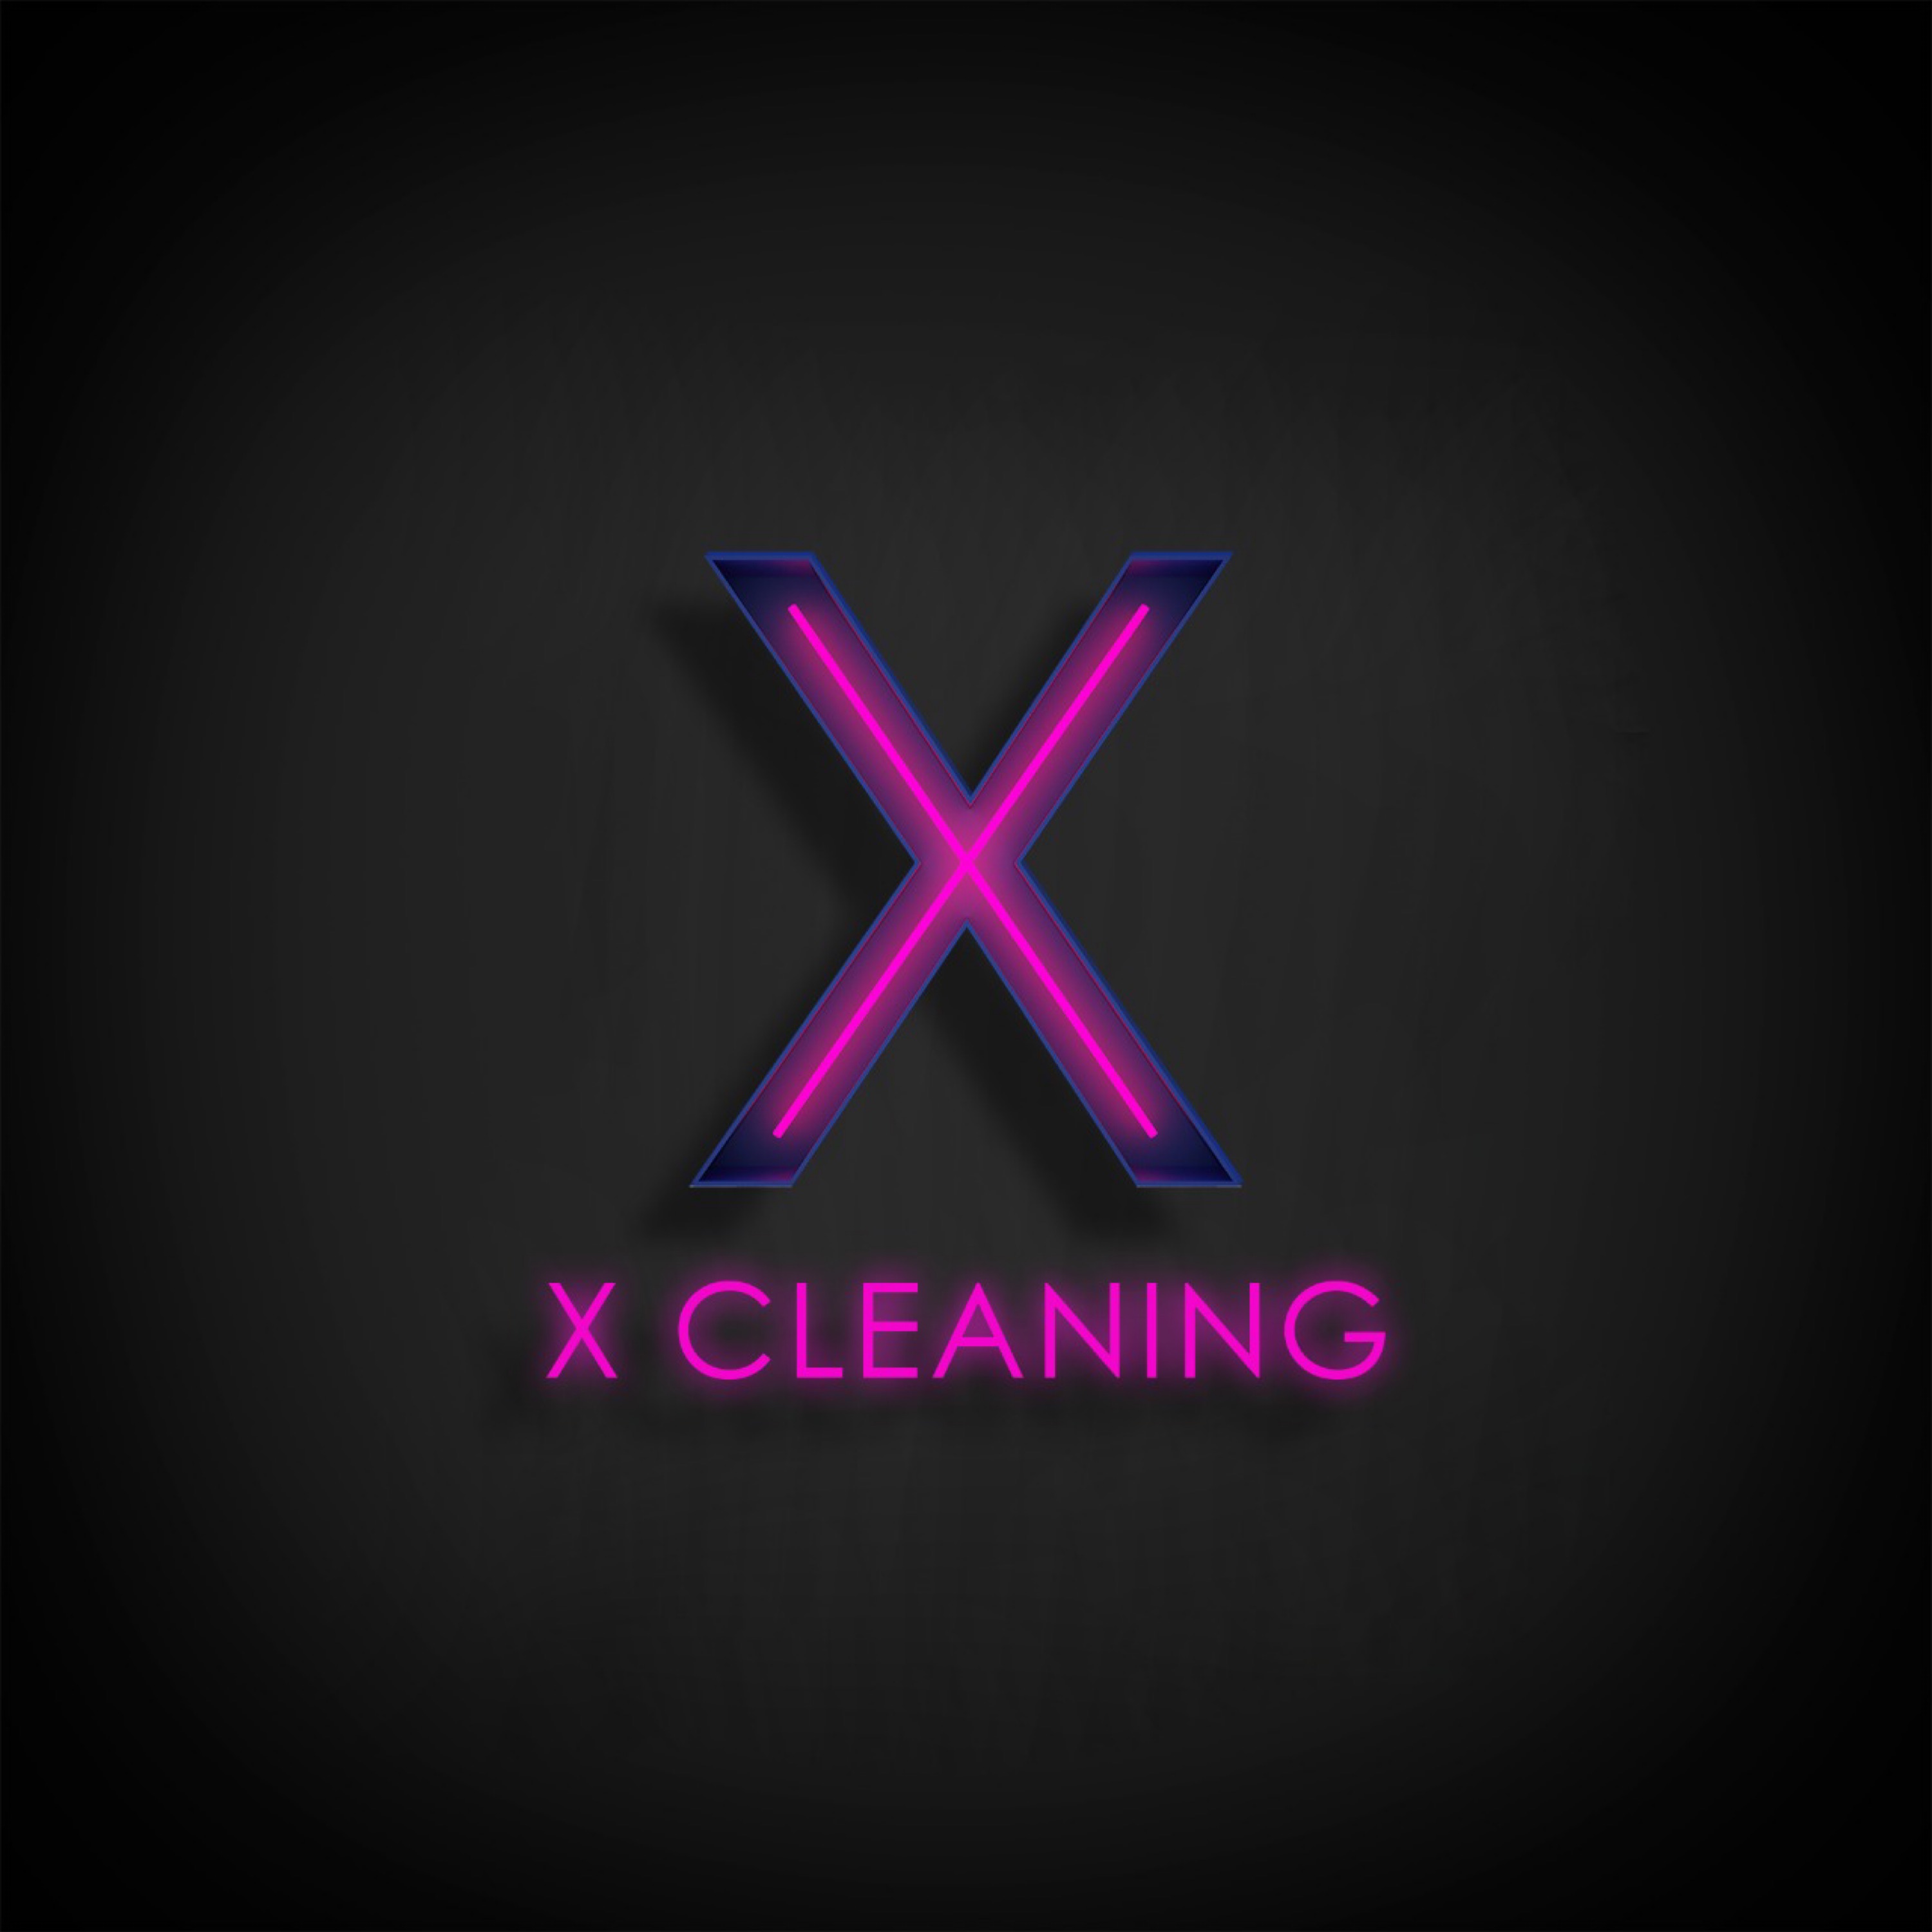 XCleaning Service Logo